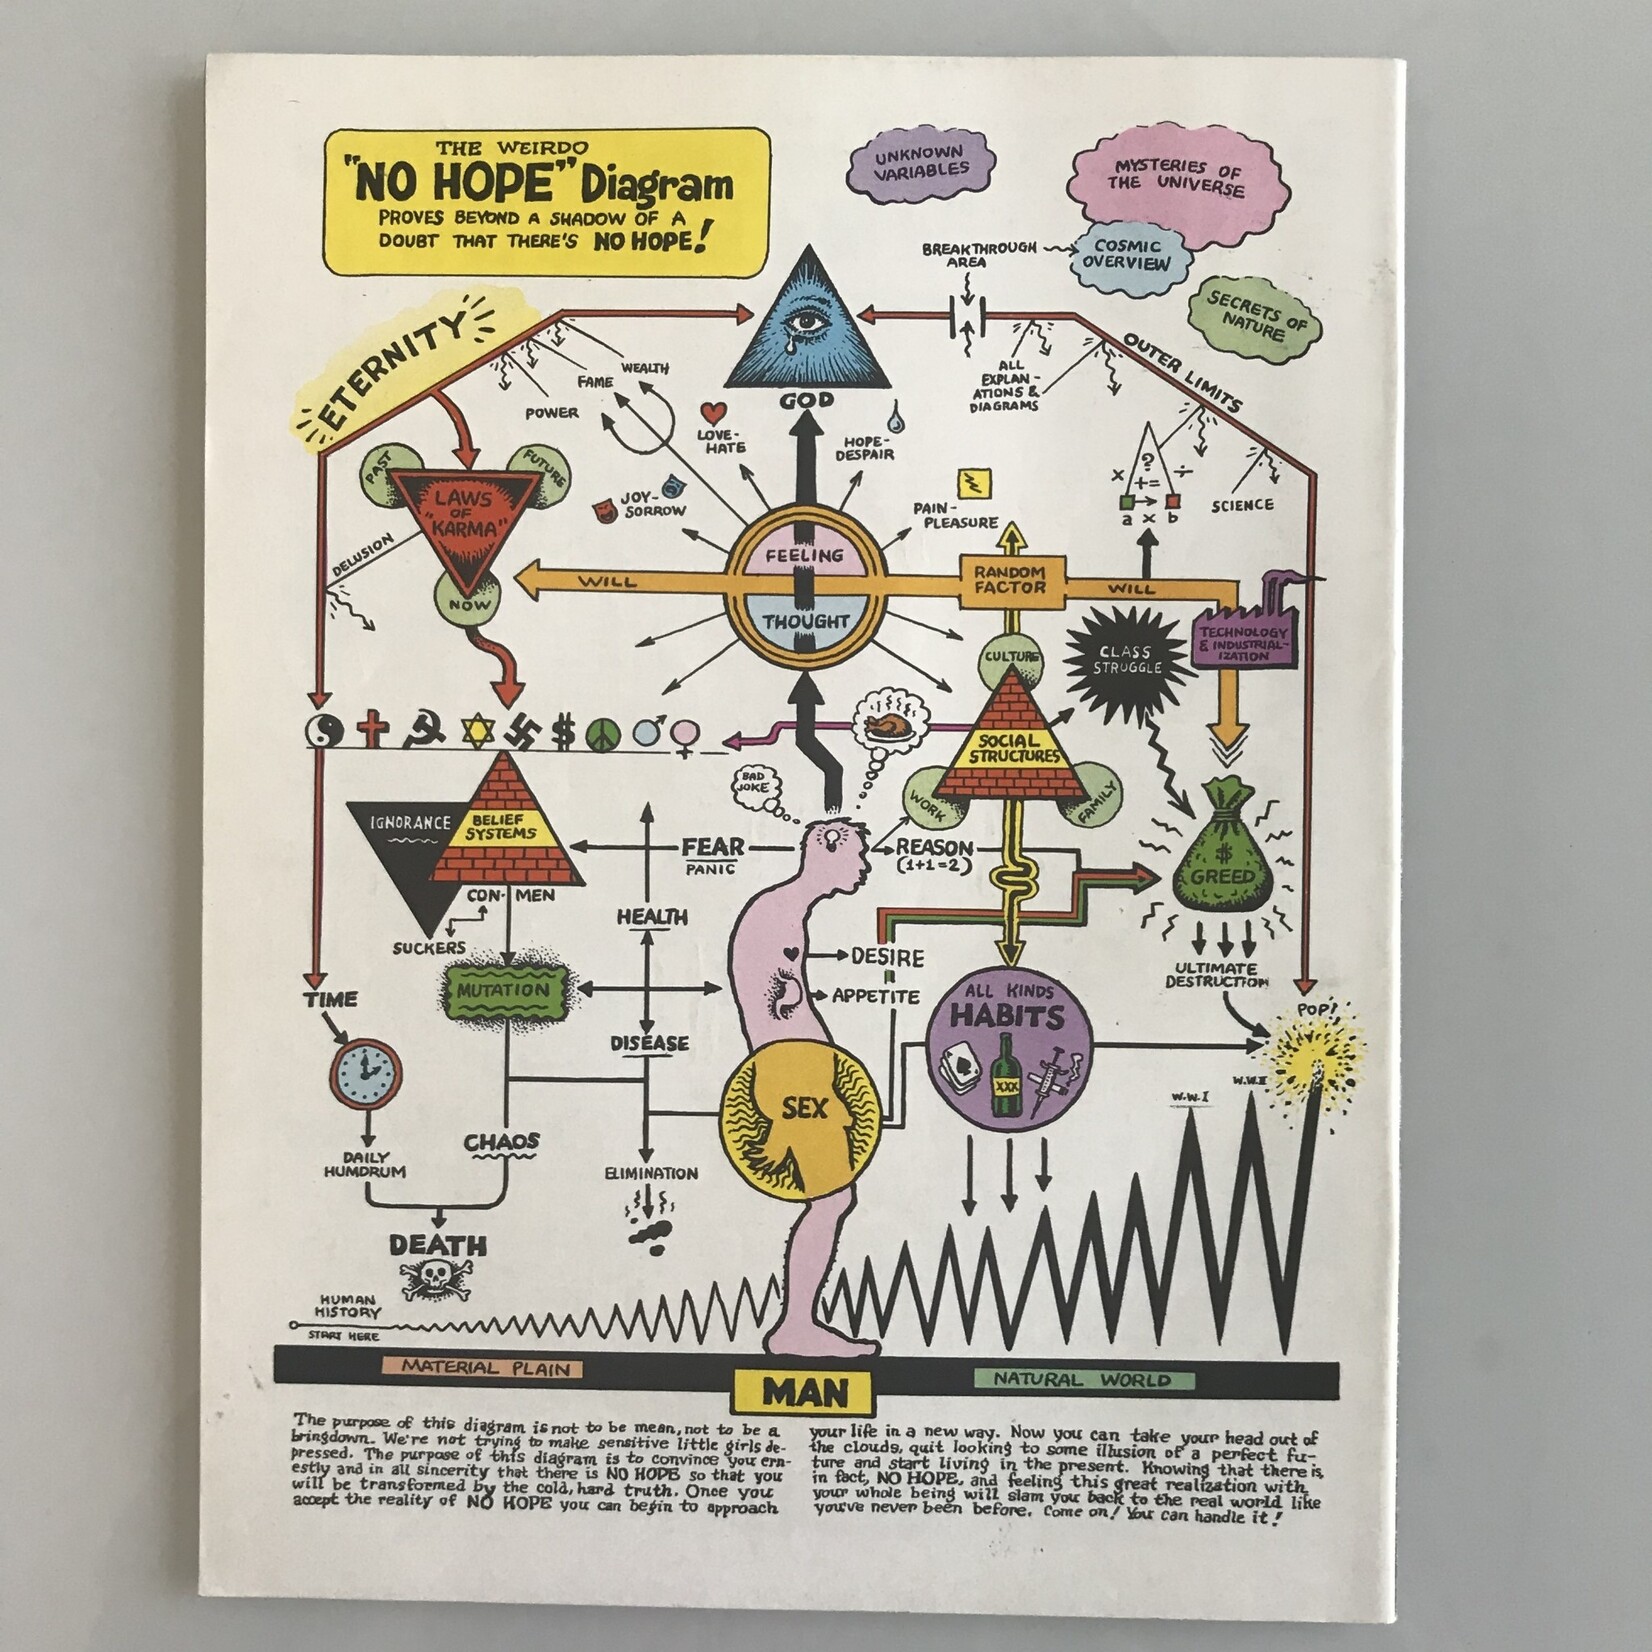 Weirdo - Vol. 1 #03 Fall 1981 (November 1981 Second Printing) - Comic Book